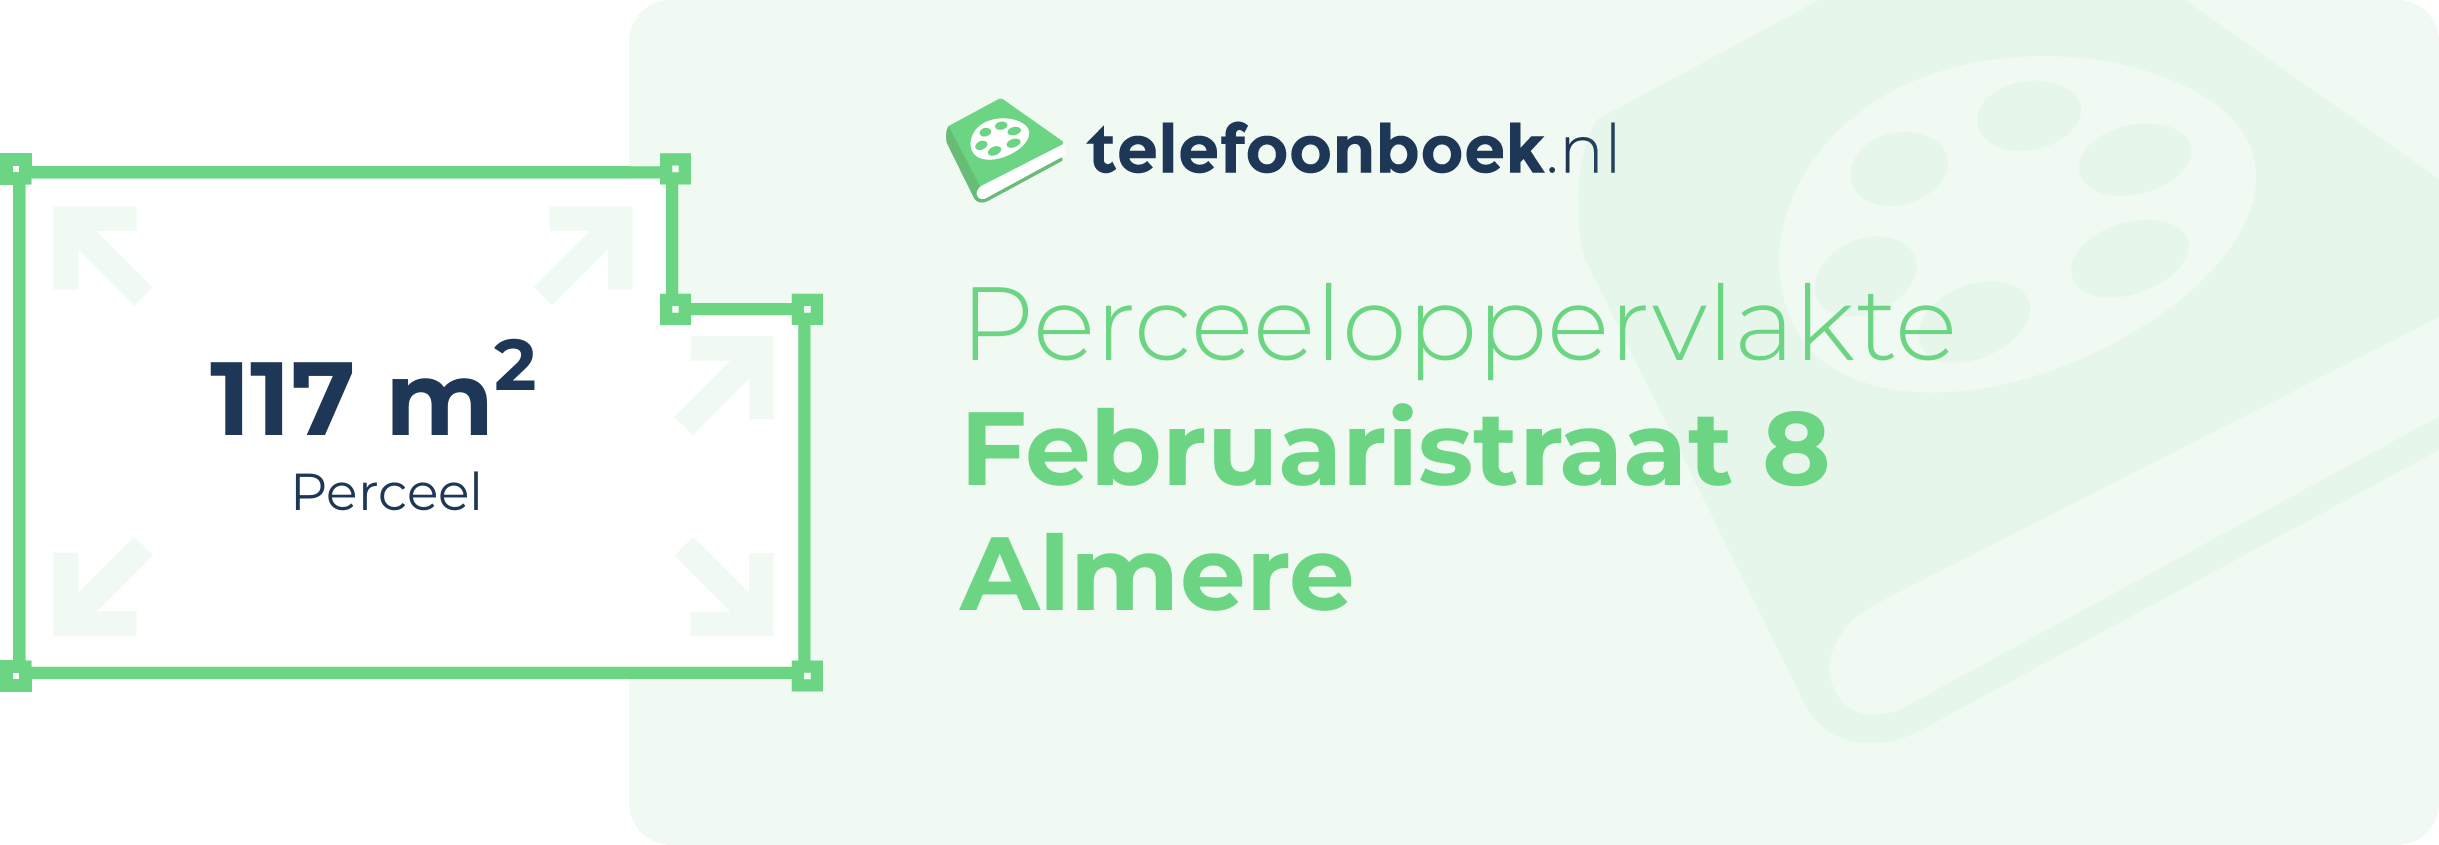 Perceeloppervlakte Februaristraat 8 Almere